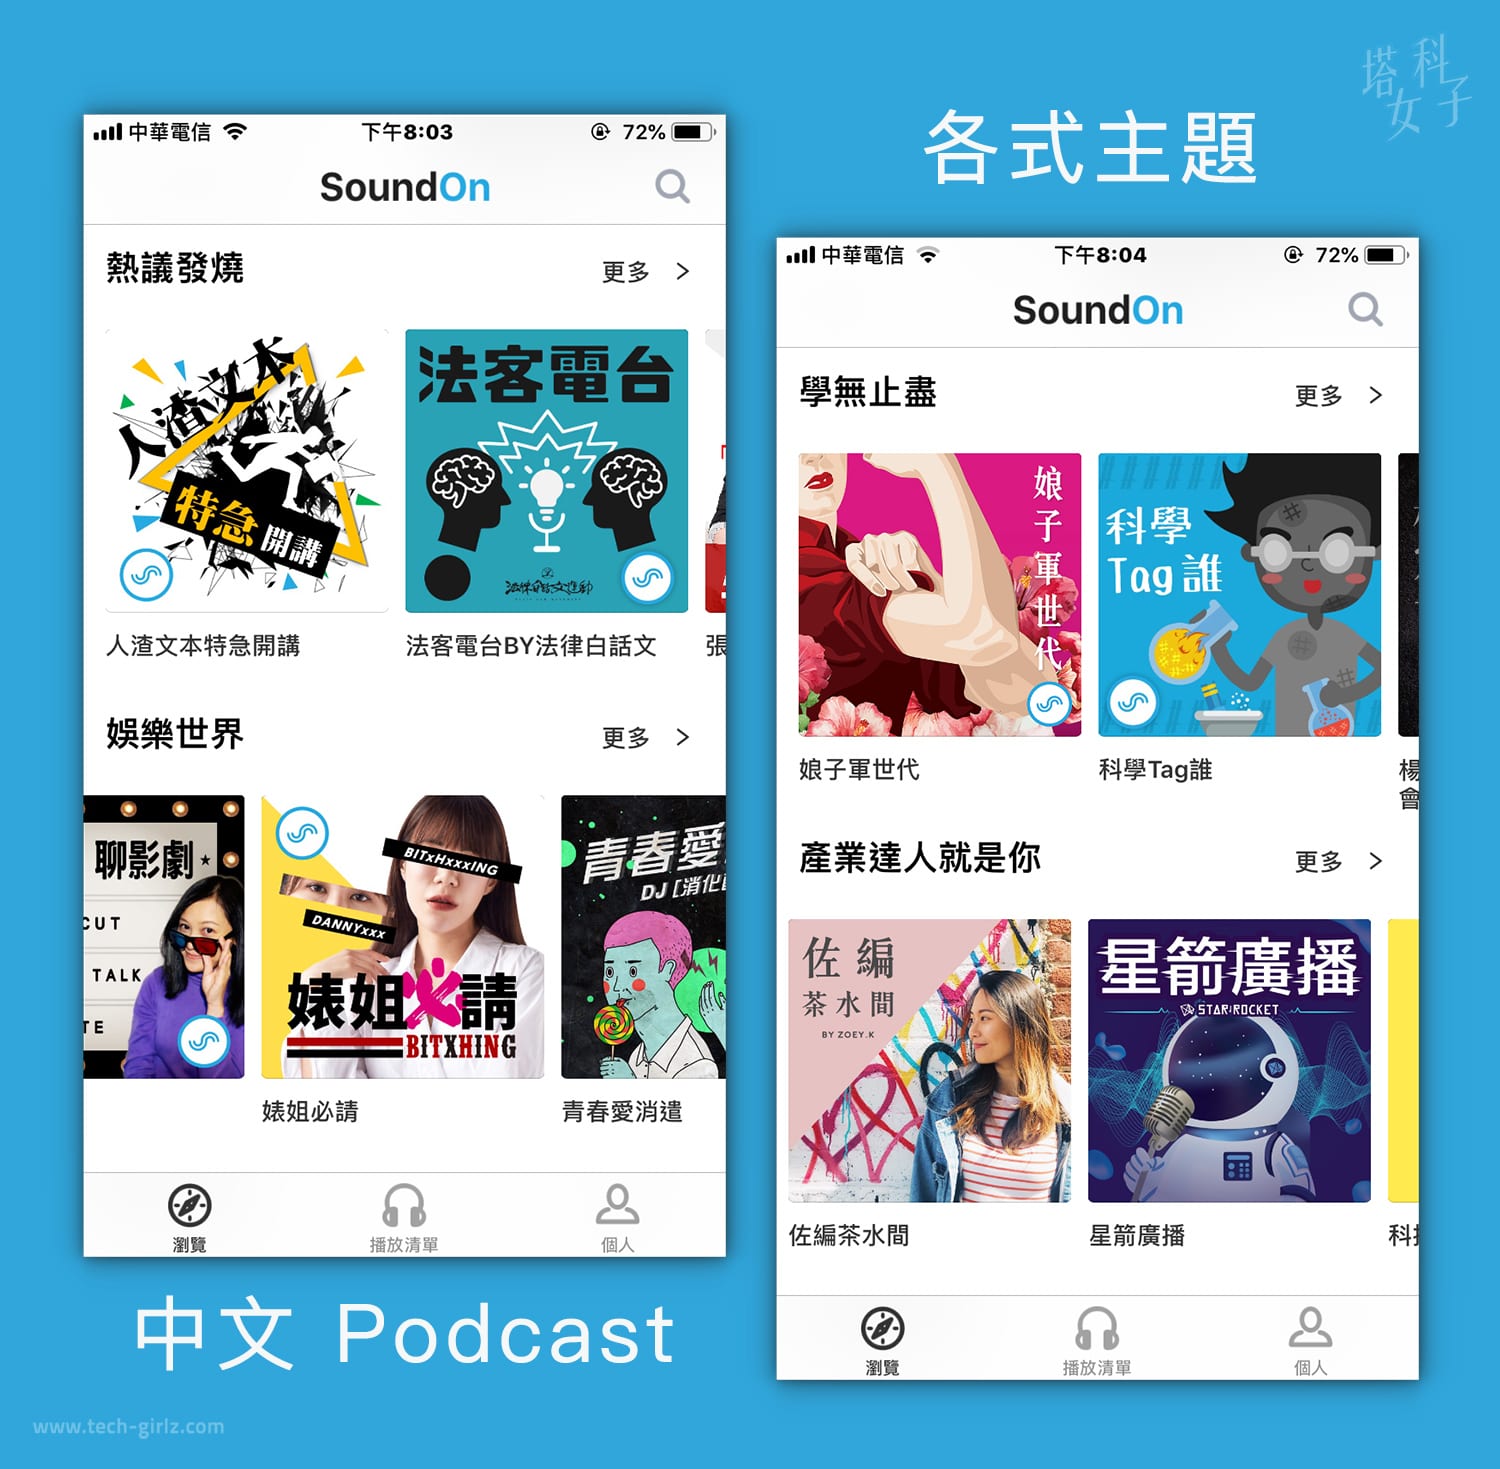 Podcast 中文平台 - SoundOn 聲浪 : 各式主題